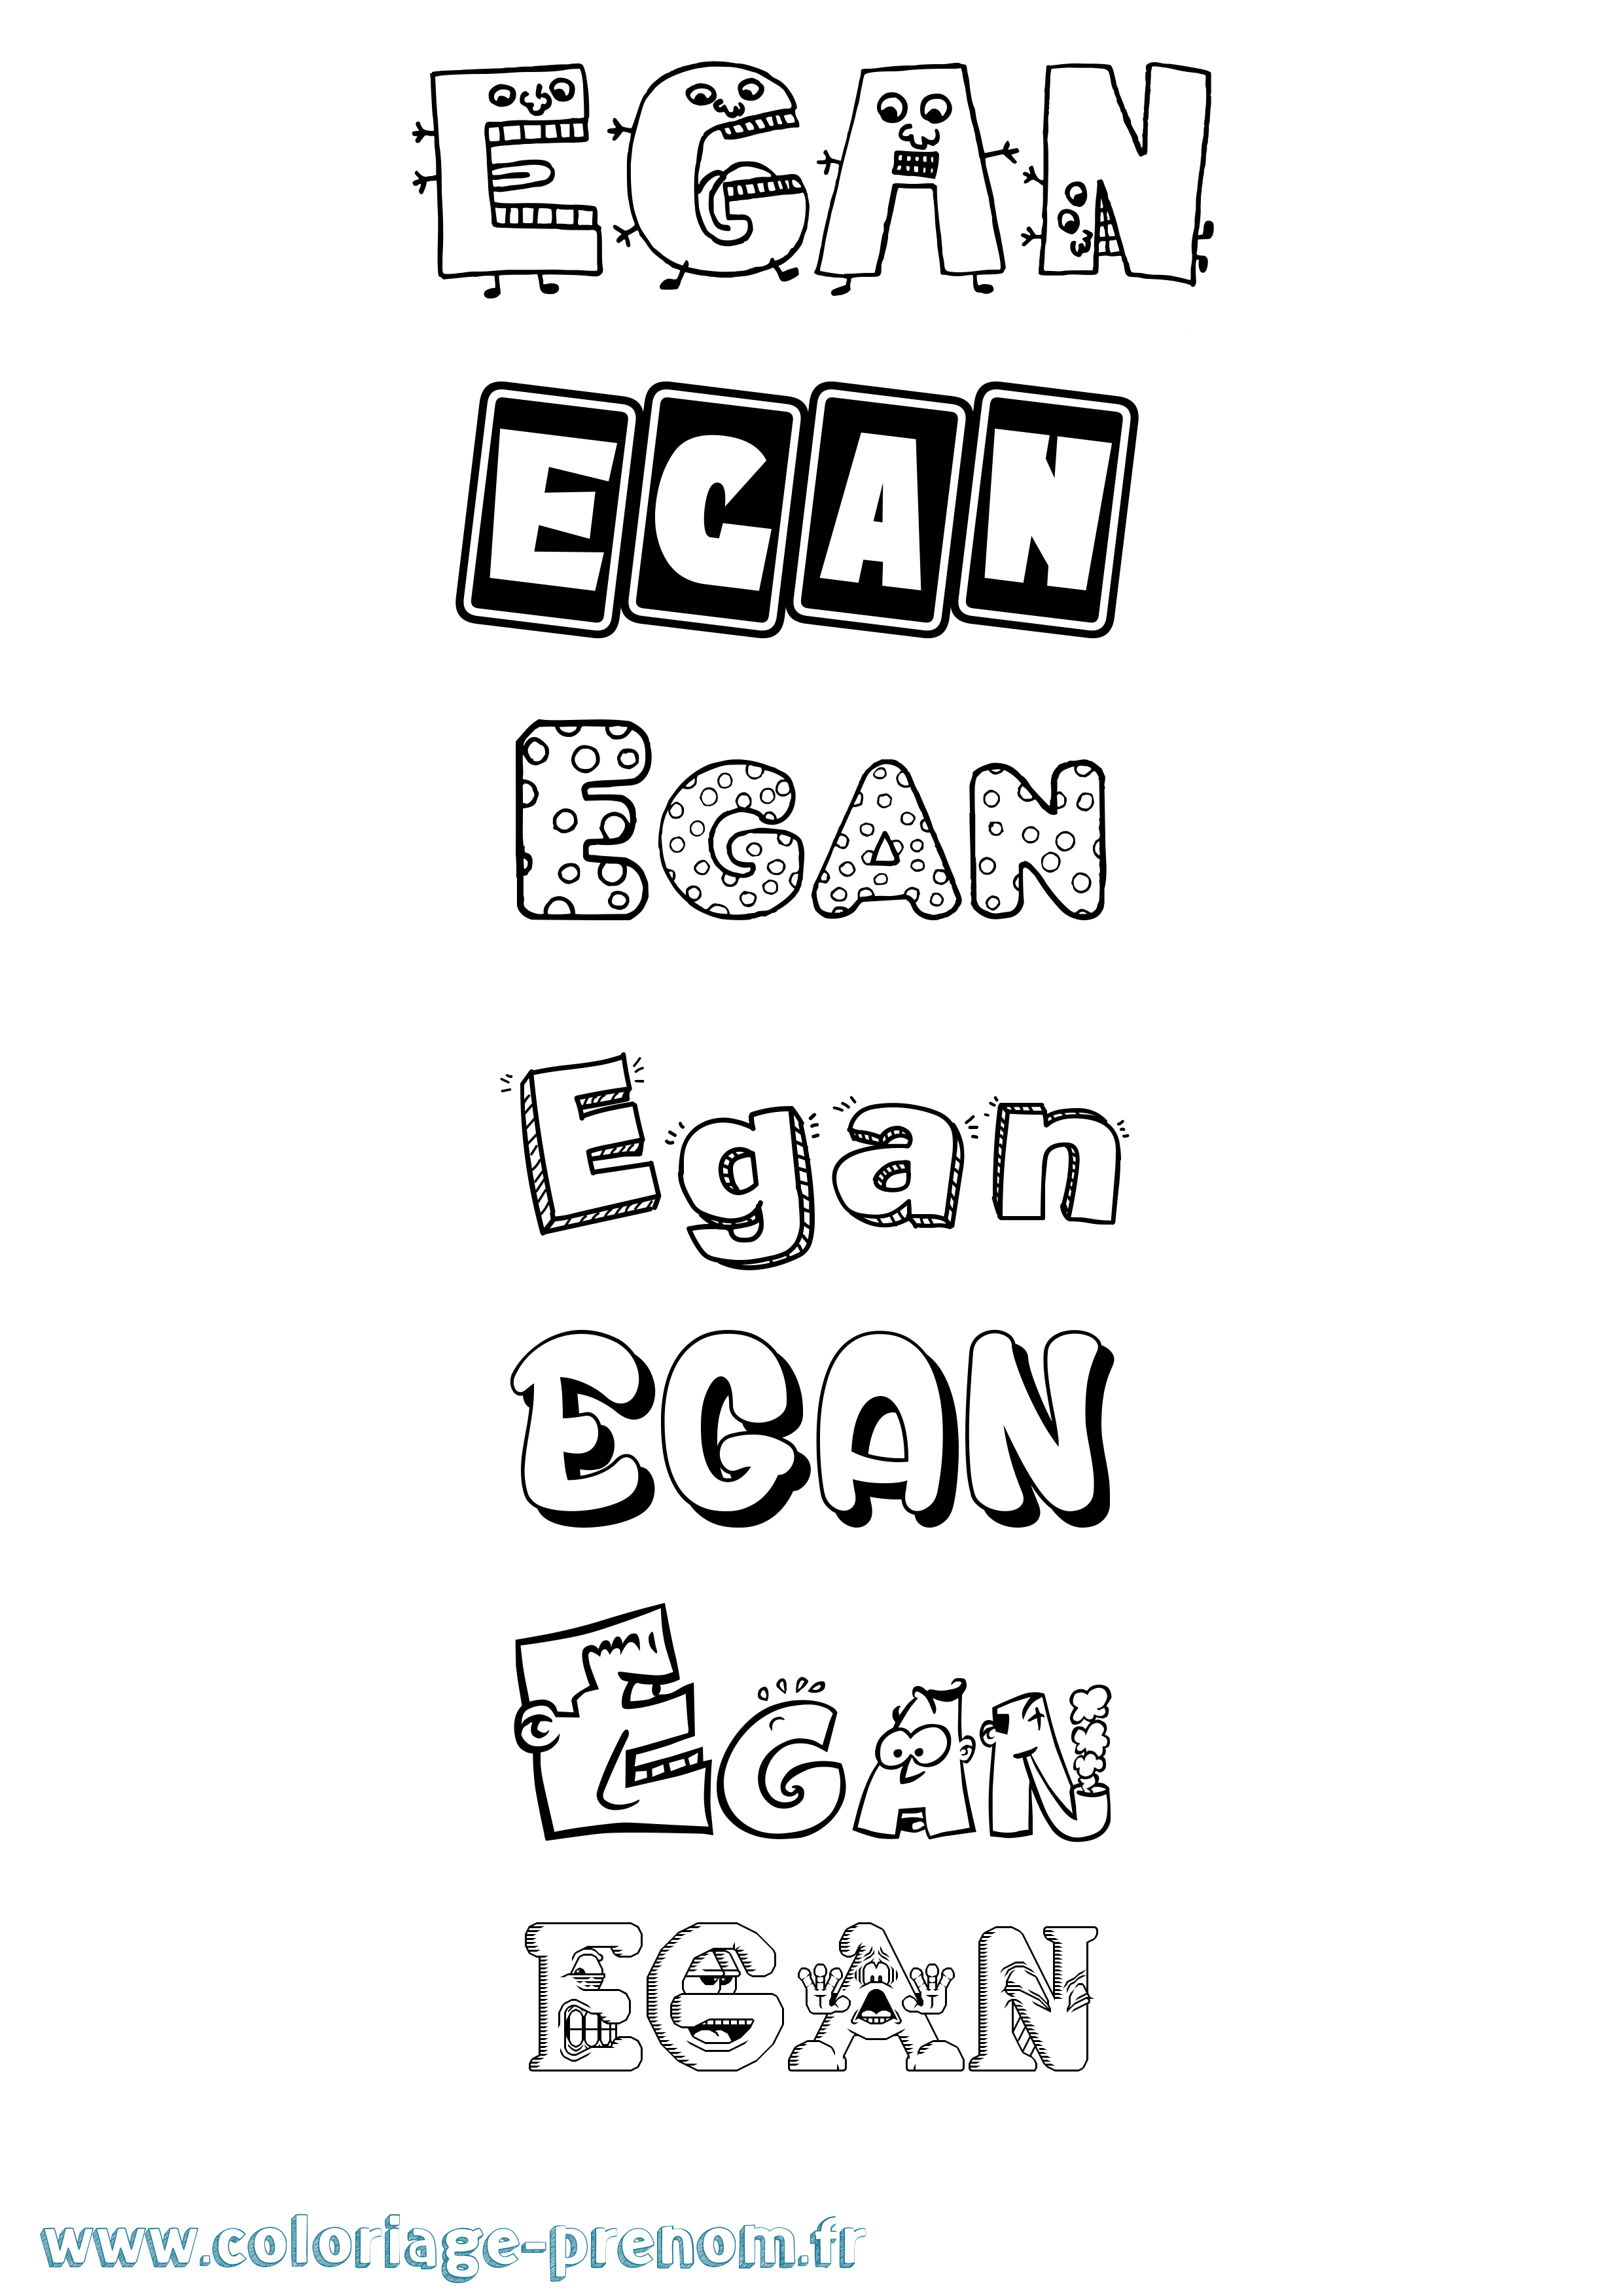 Coloriage prénom Egan Fun